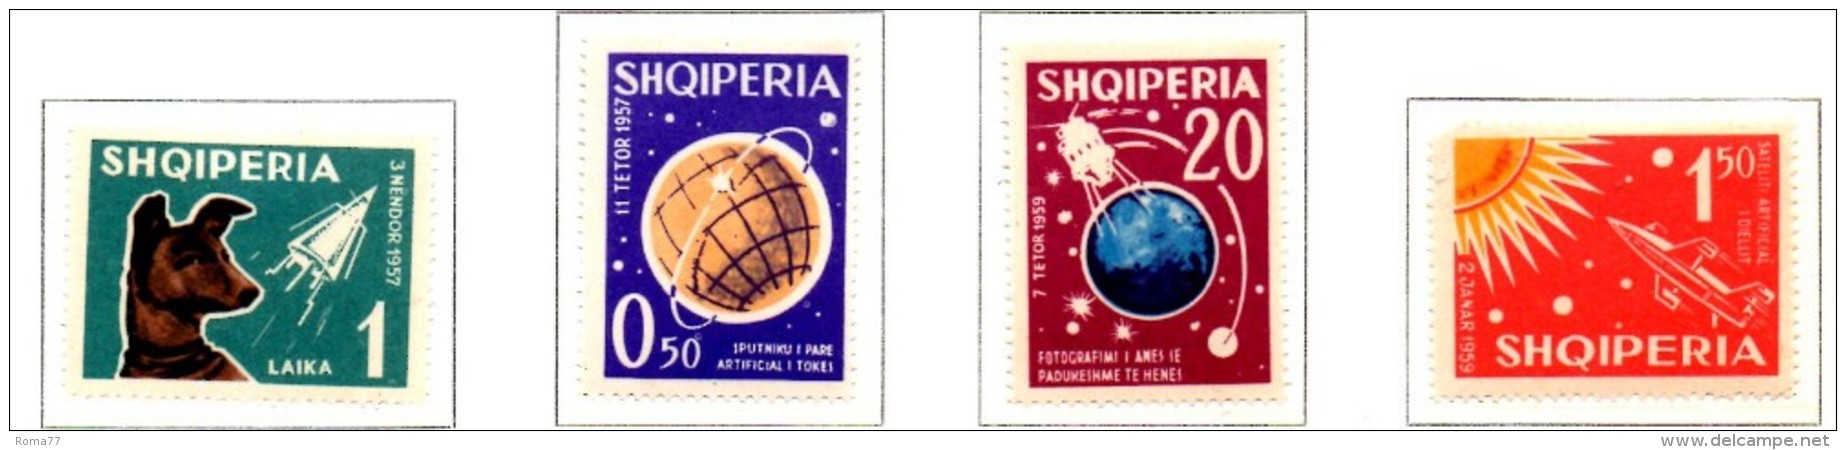 MISS109 - ALBANIA  1961 , Spazio  * - Albania